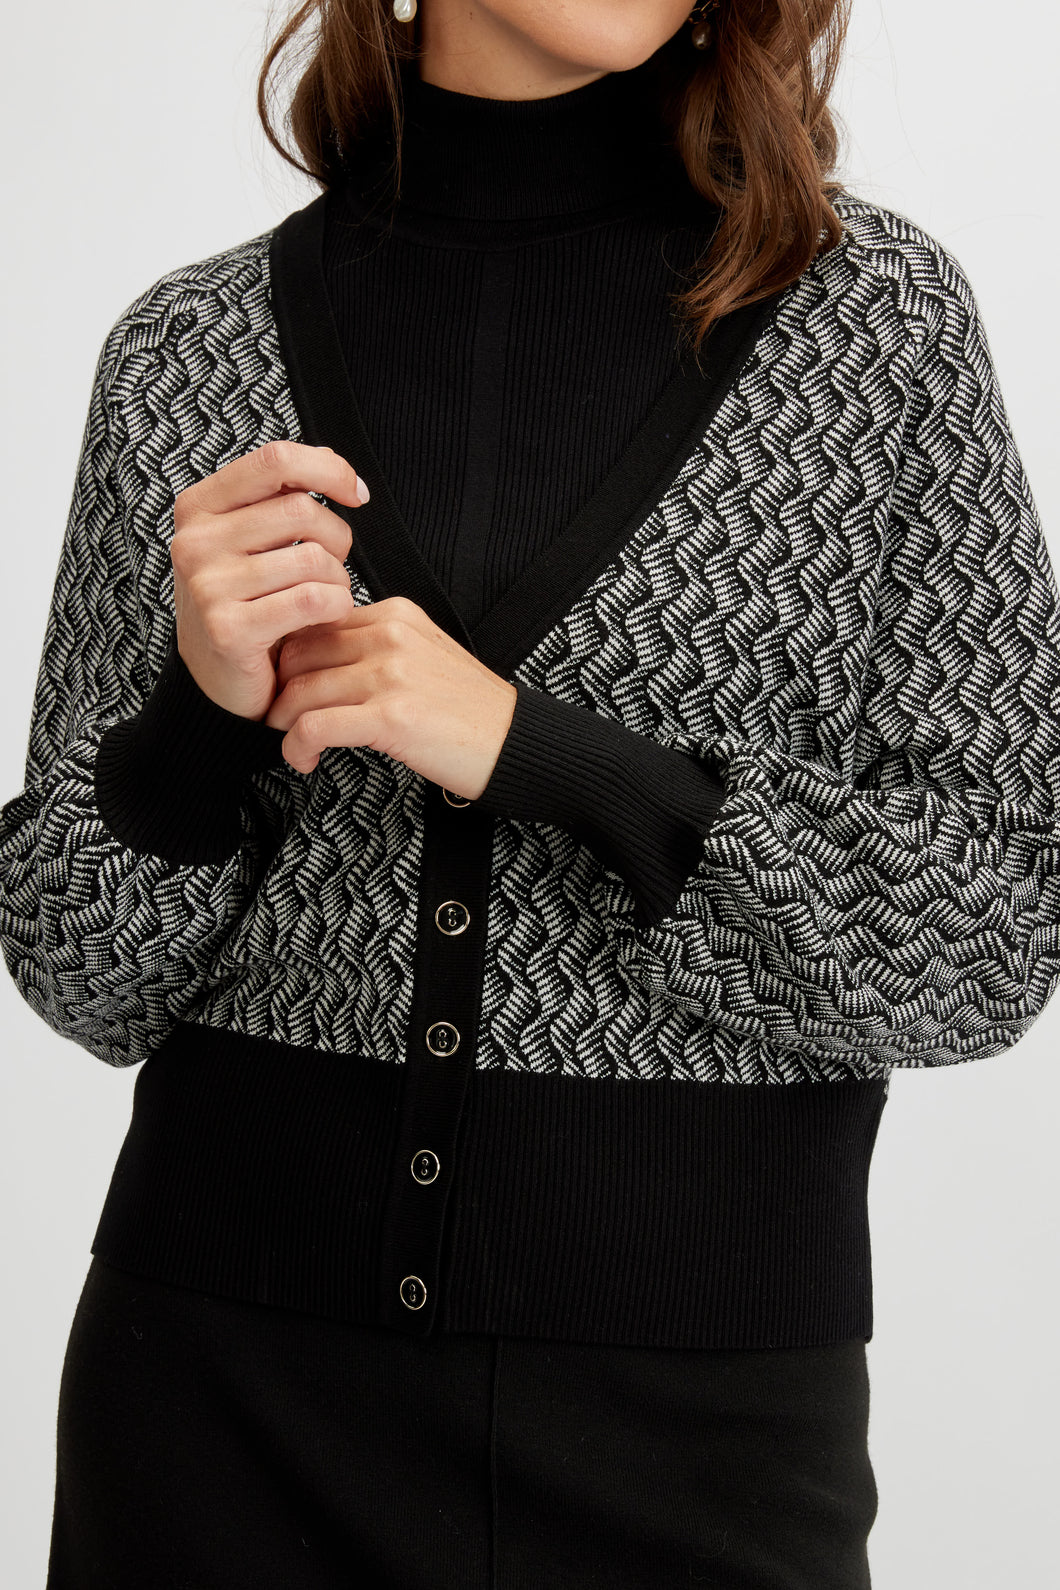 Cardigan knit sweater with black knit cuff